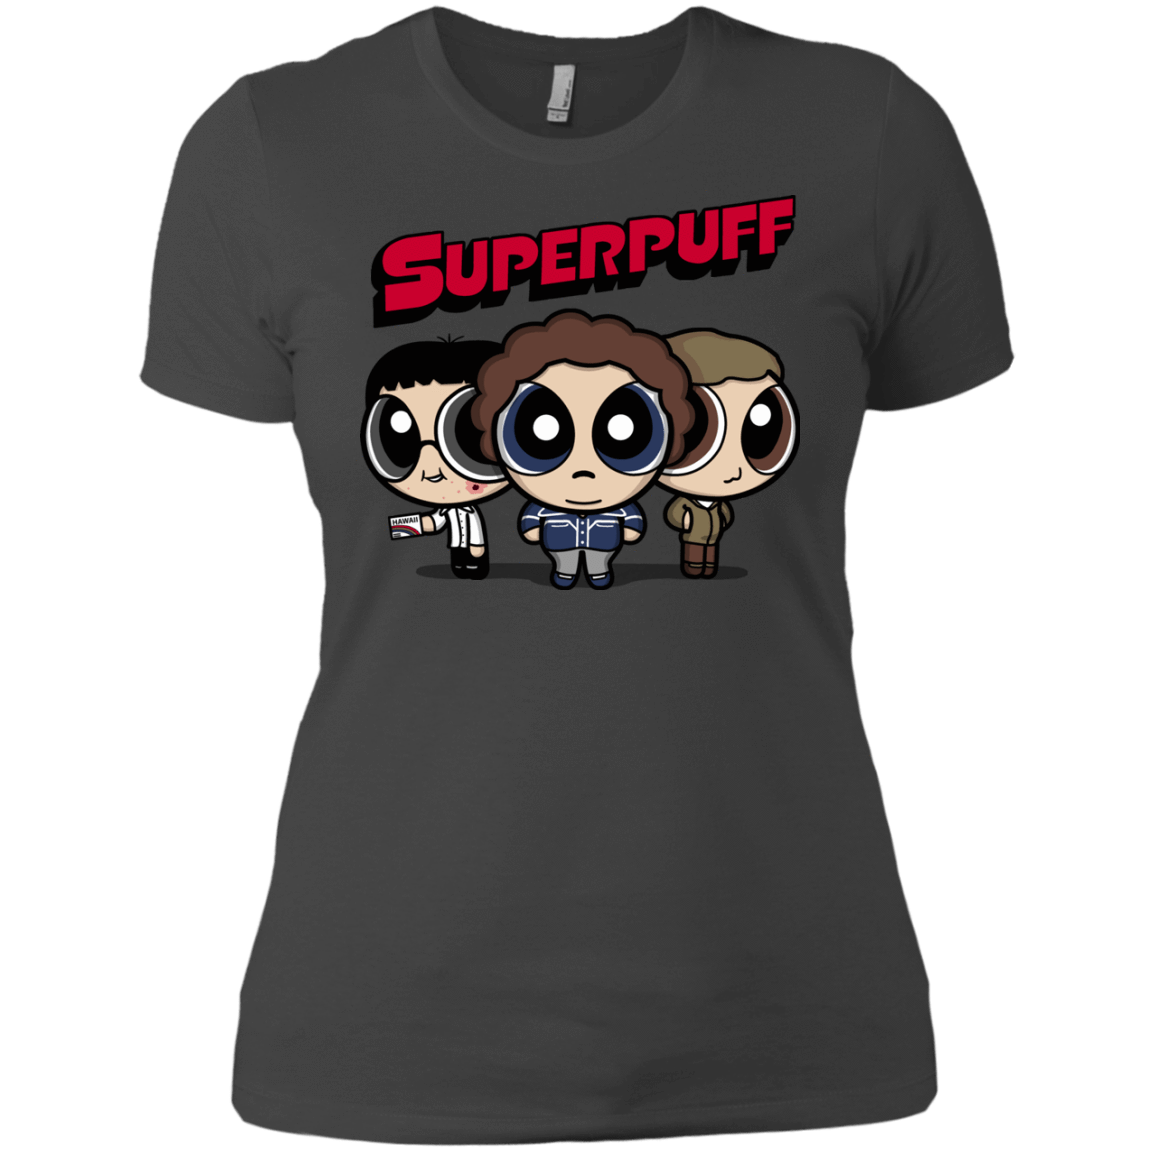 T-Shirts Heavy Metal / X-Small Superpuff Women's Premium T-Shirt